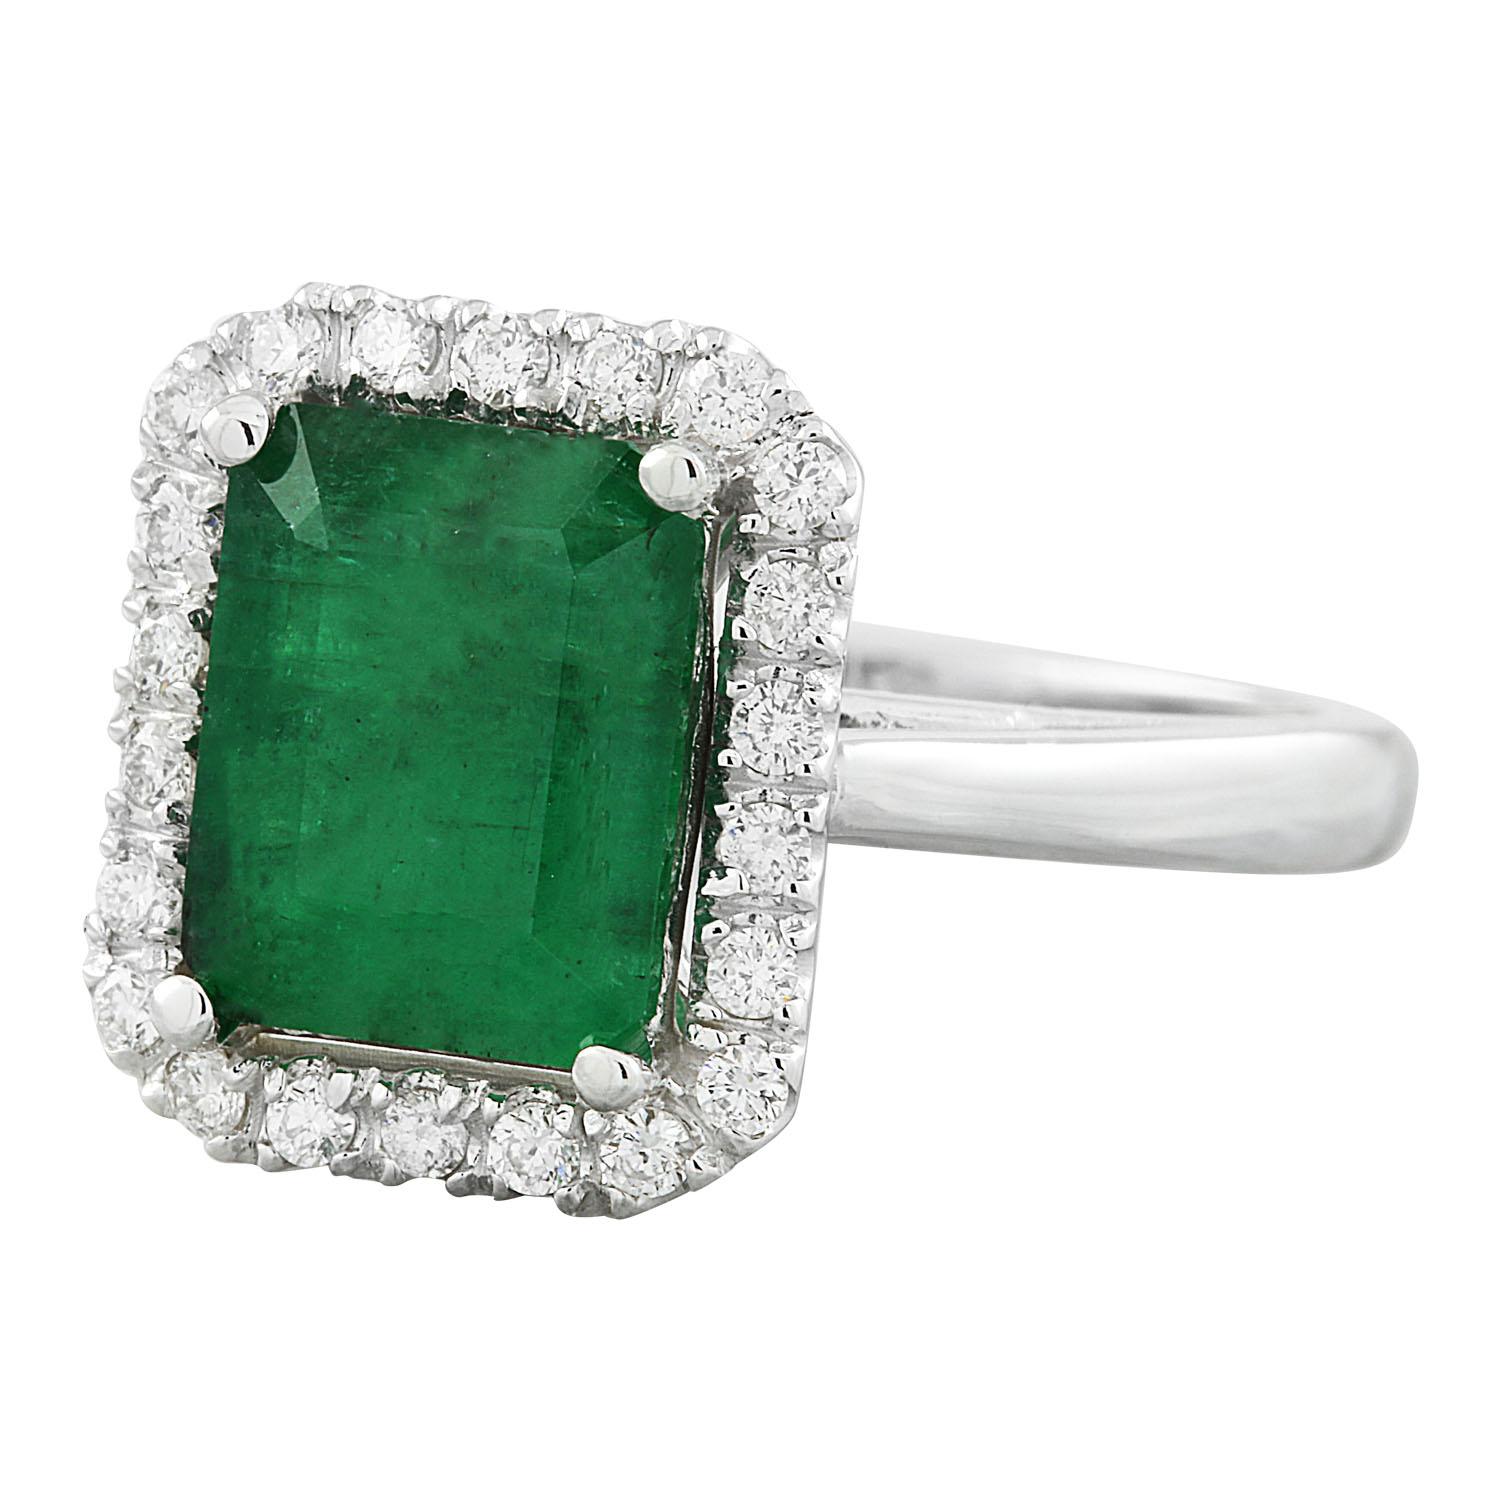 3.55 Carat Natural Emerald 14 Karat Solid White Gold Diamond Ring
Stamped: 14K 
Ring Size 7
Total Ring Weight: 5.2 Grams 
Emerald Weight 3.10 Carat (10.00x8.00 Millimeters)
Natural Emerald Treatment: Oil Only
Diamond Weight: 0.45 Carat (F-G Color,